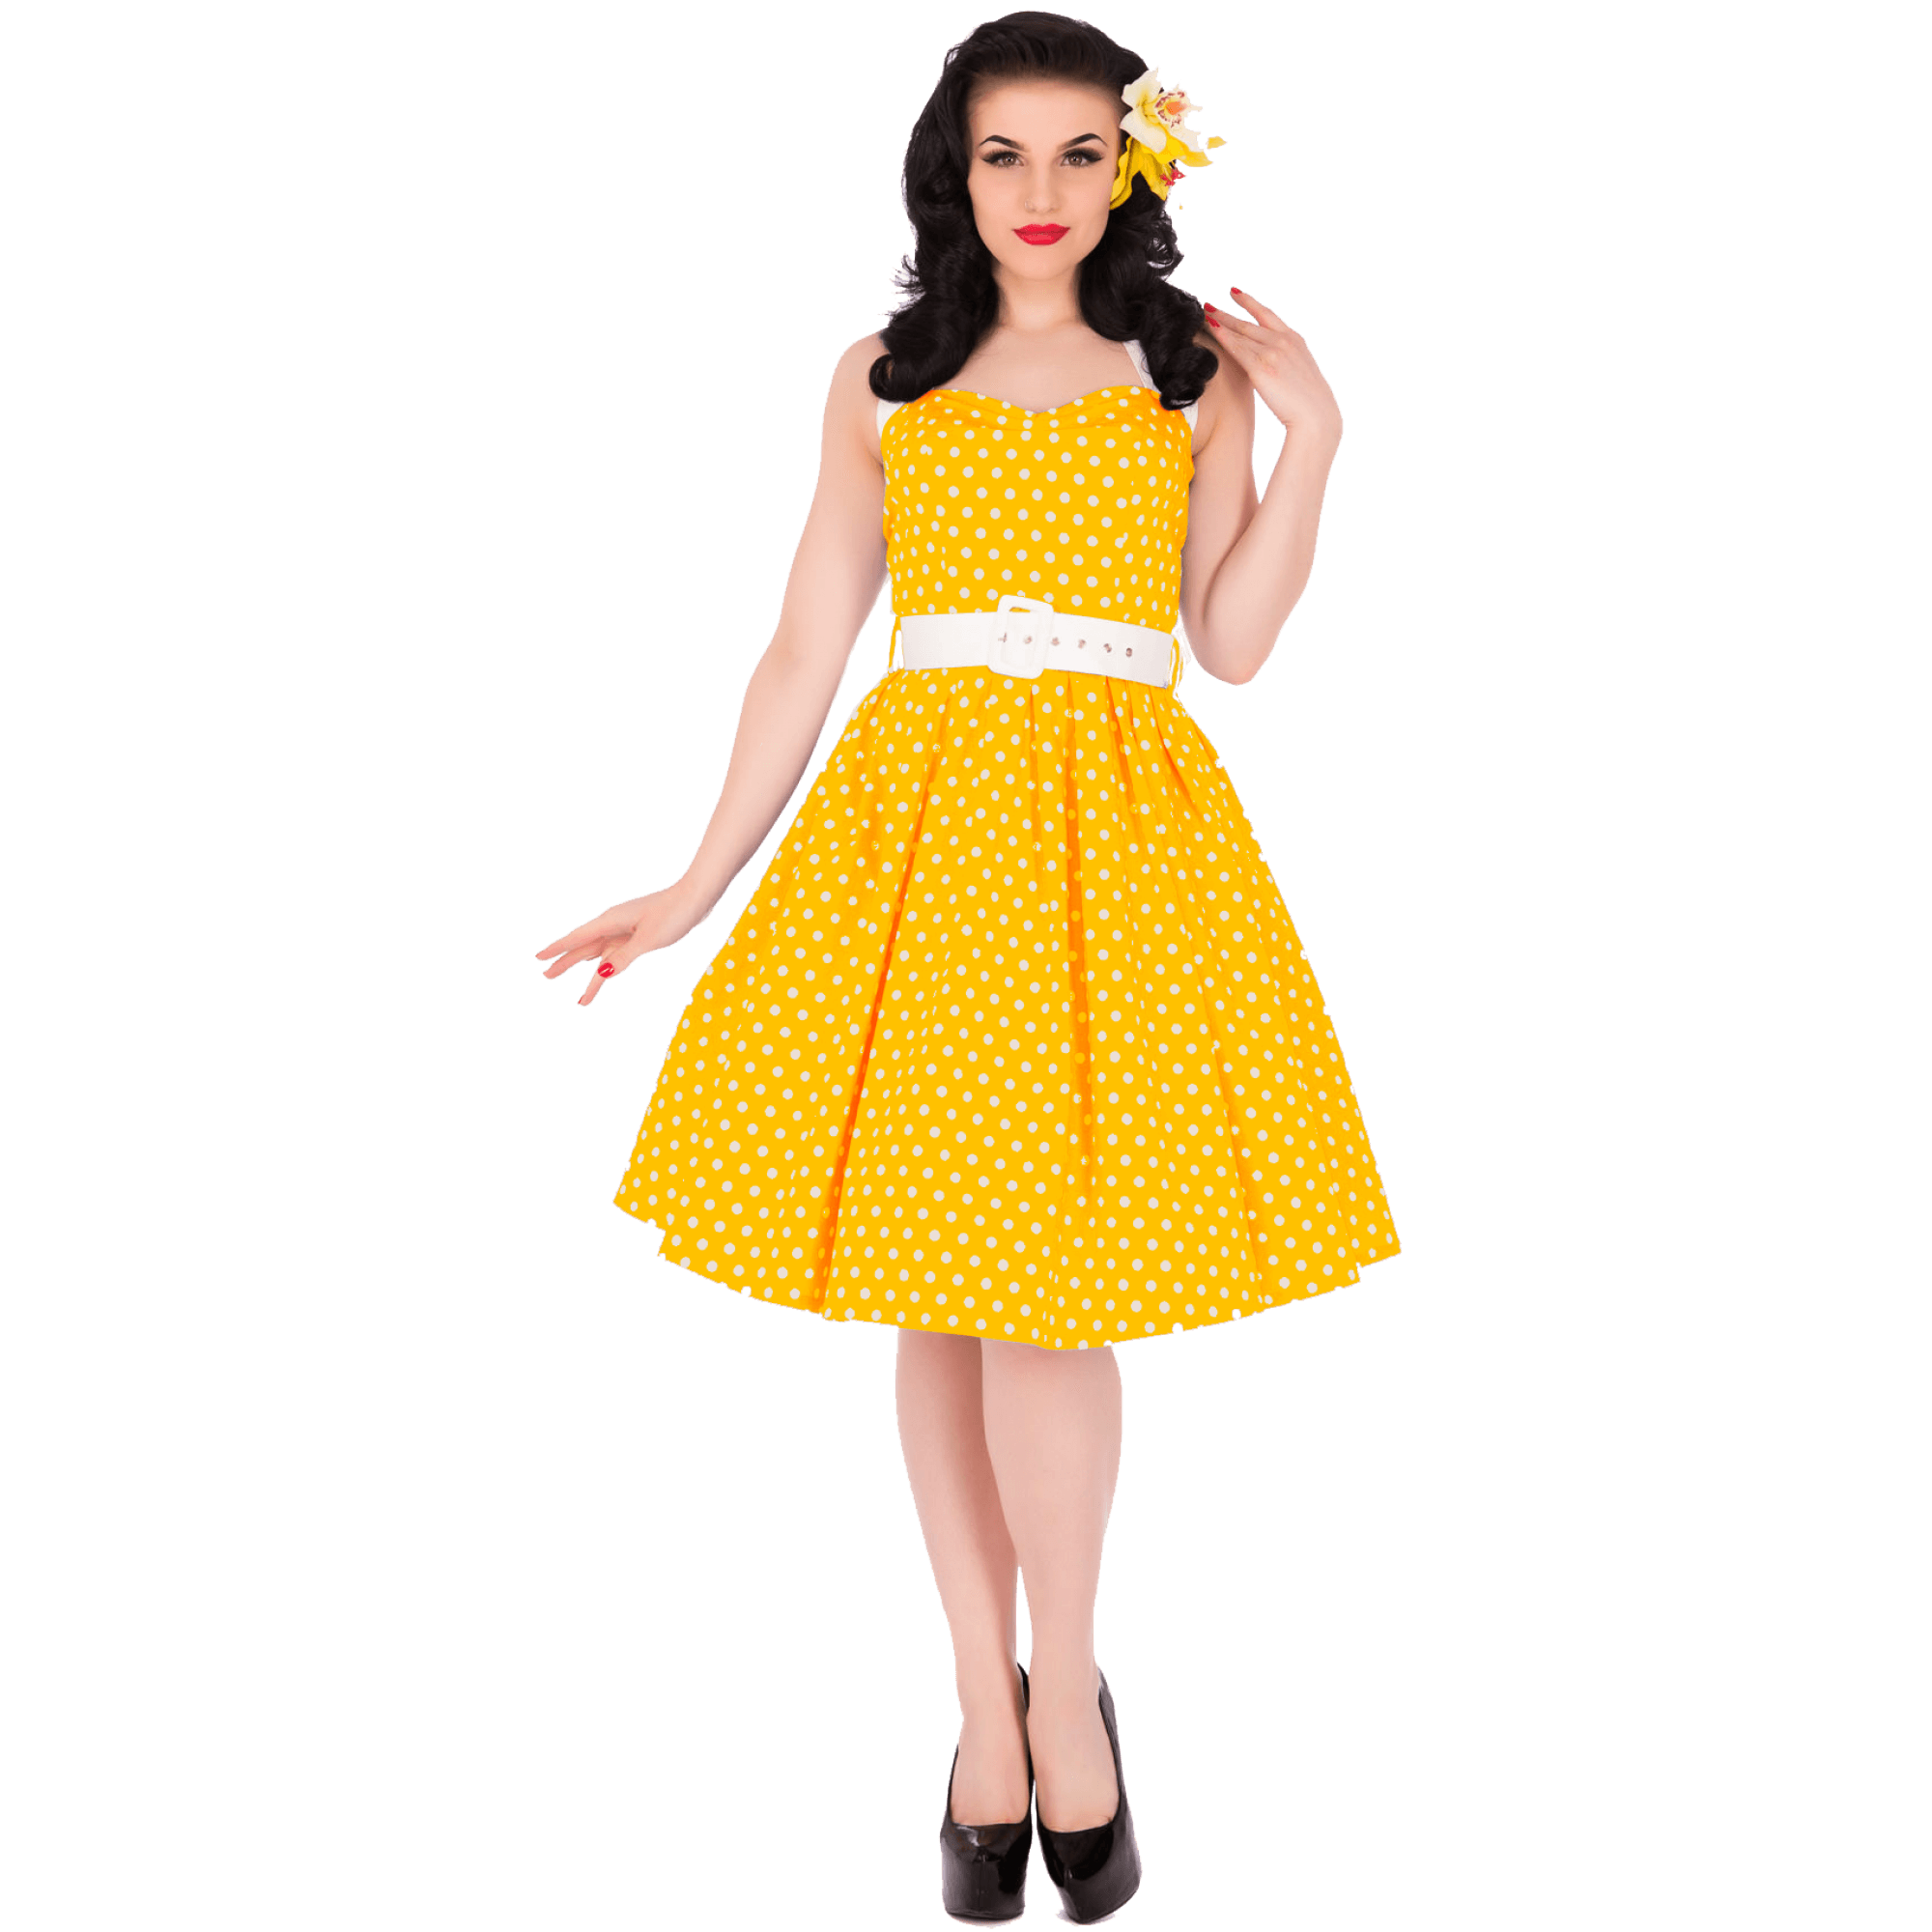 Retro žlté bodkové šaty s mašľou (1950 Sophie )